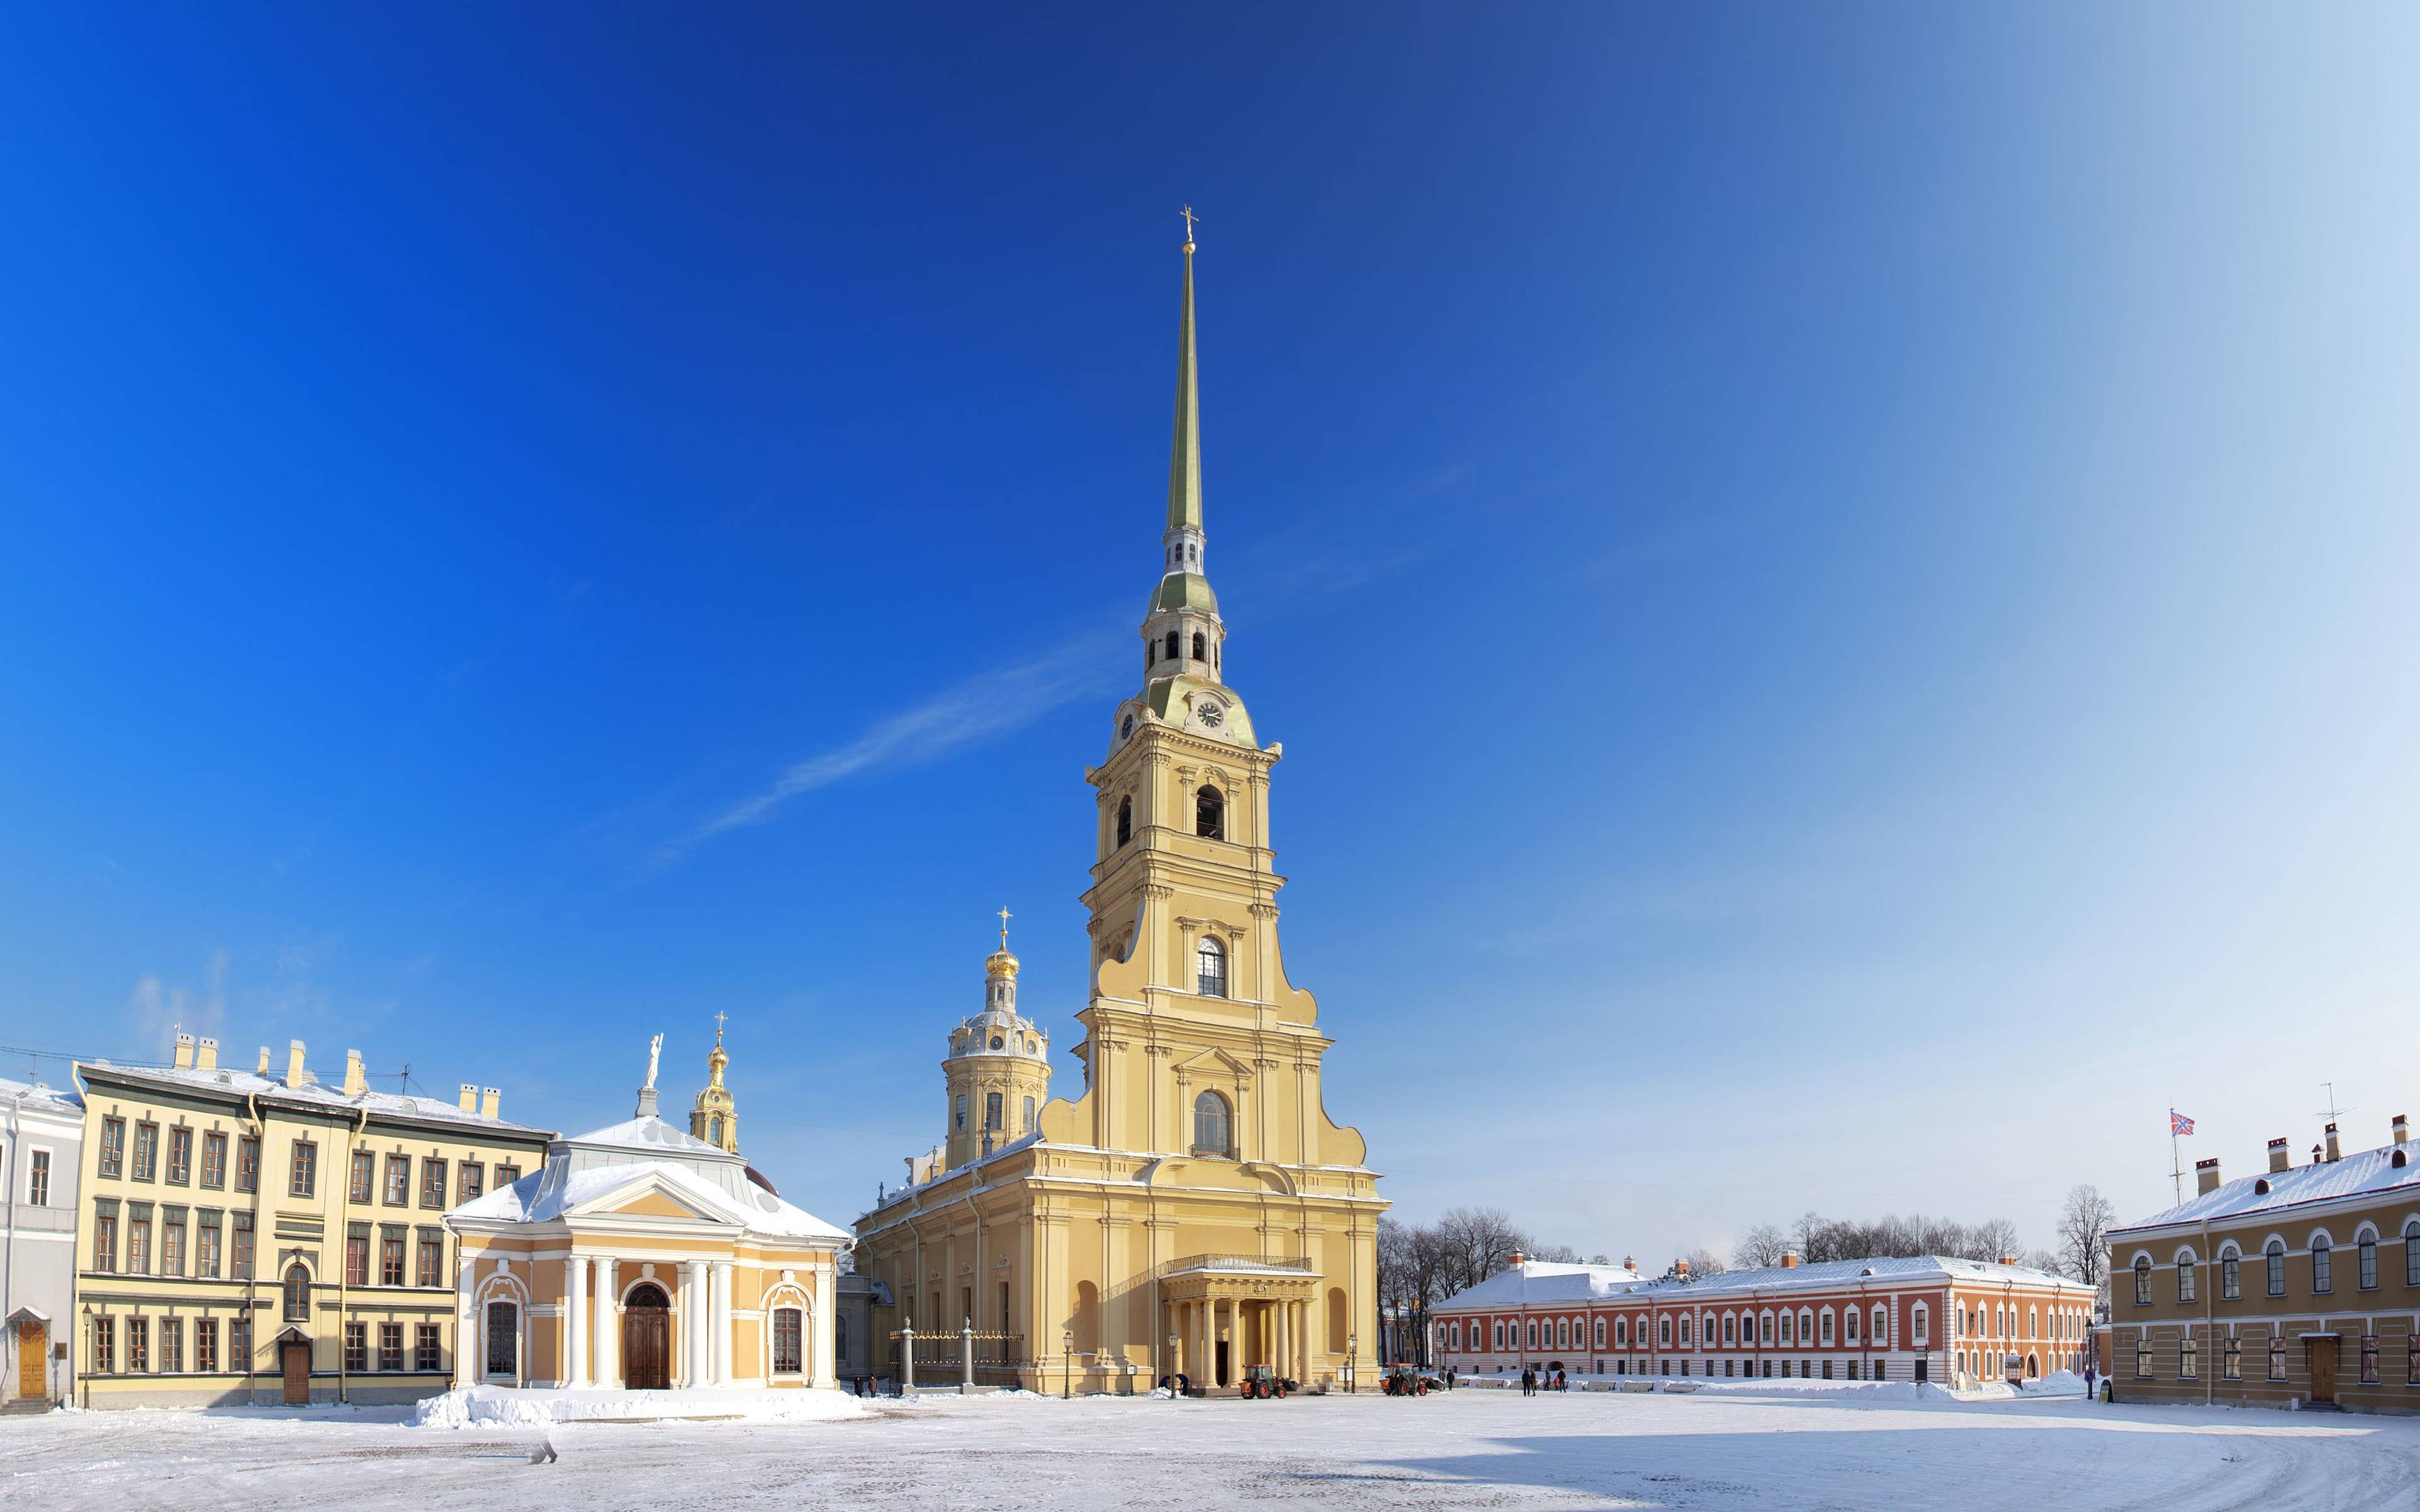 Sankt-Petersburg im Winterglanz